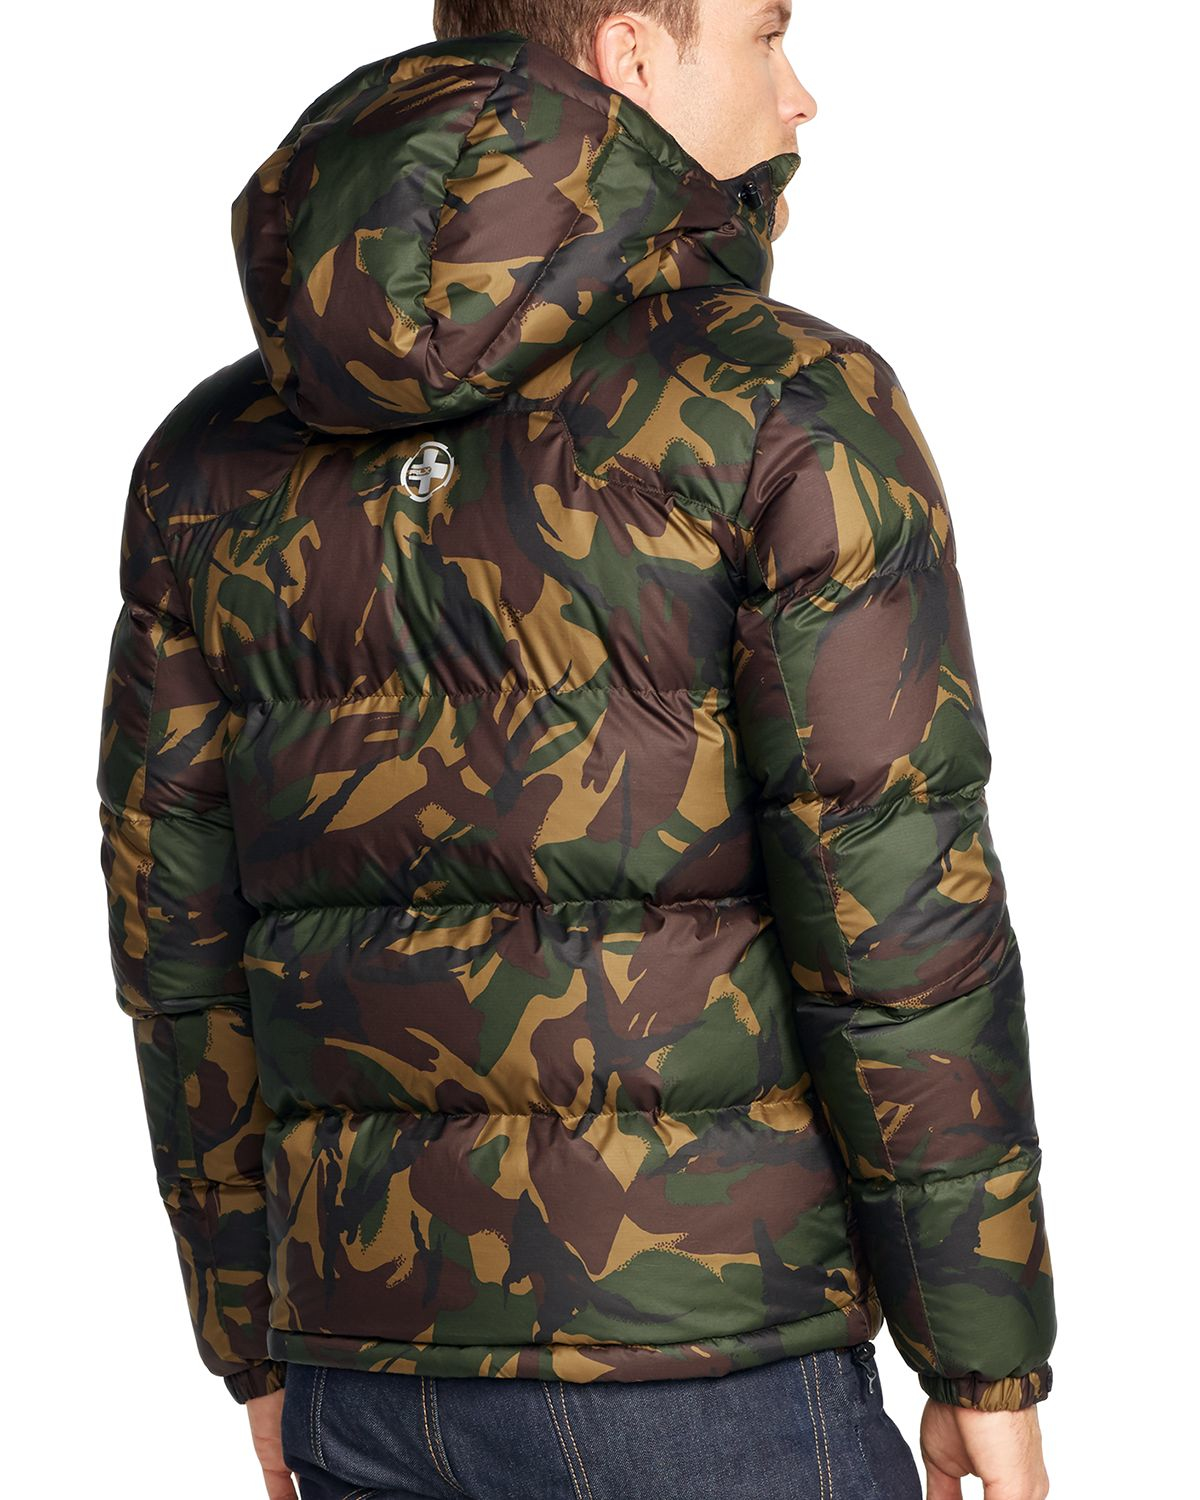 polo camouflage jacket